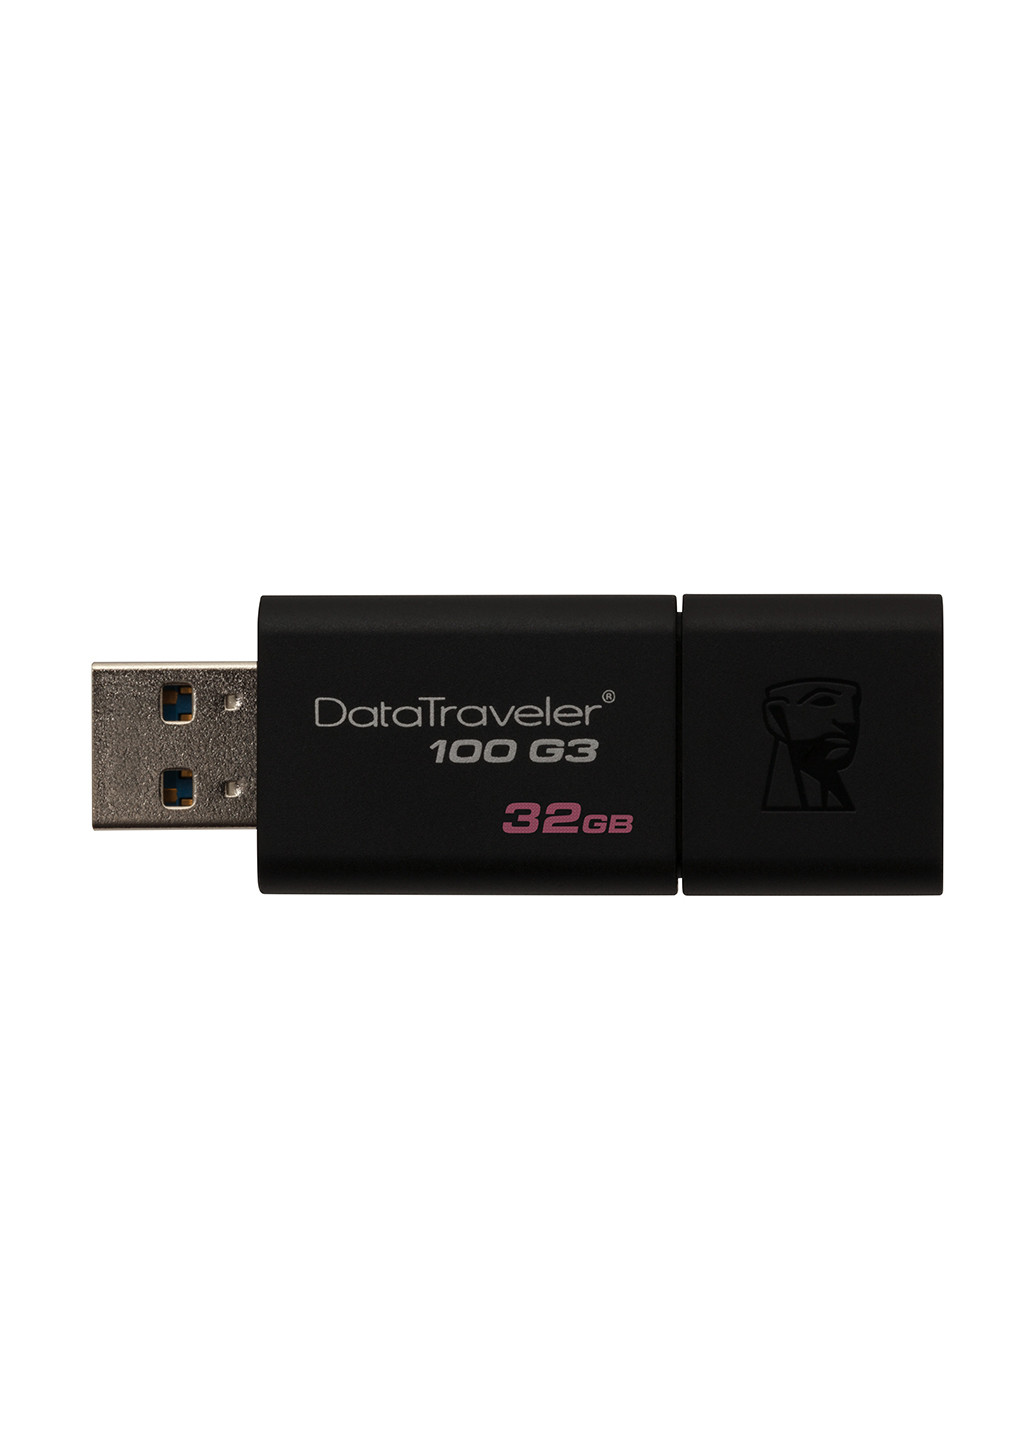 Флеш пам'ять USB DataTraveler 100 G3 32GB USB 3.0 (DT100G3 / 32GB) Kingston Флеш память USB Kingston DataTraveler 100 G3 32GB USB 3.0 (DT100G3/32GB) чорні